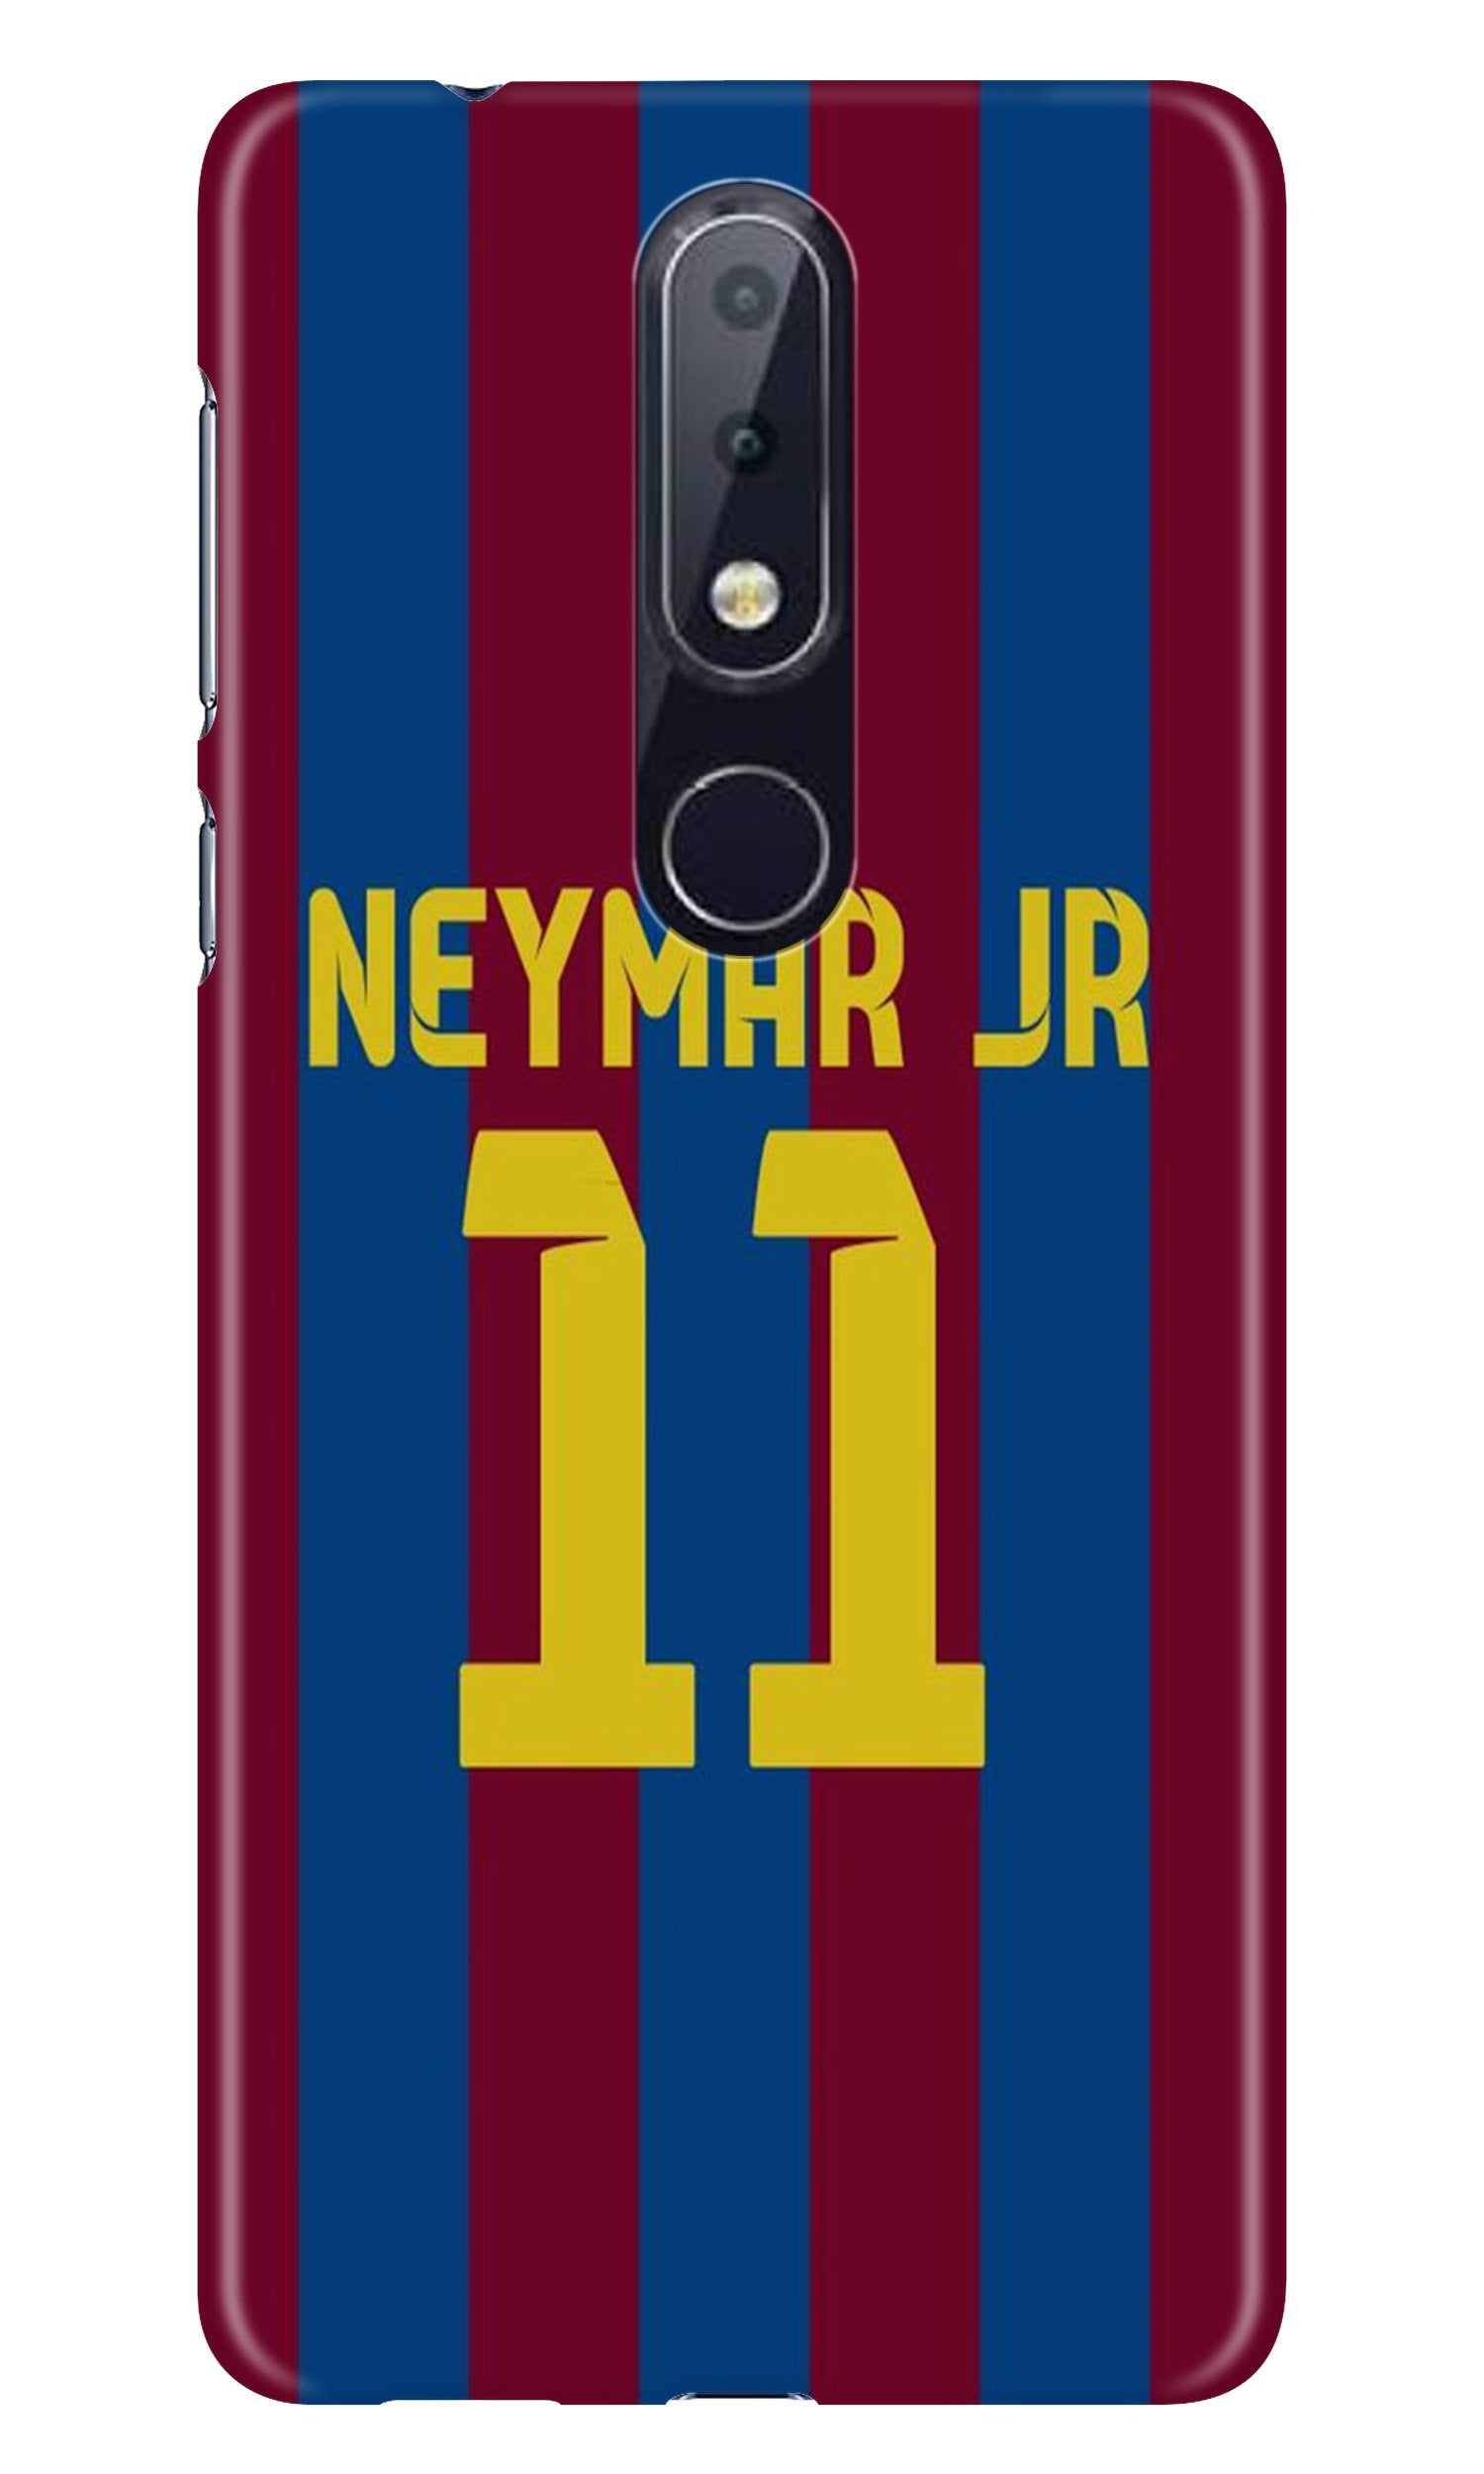 Neymar Jr Case for Nokia 6.1 Plus(Design - 162)